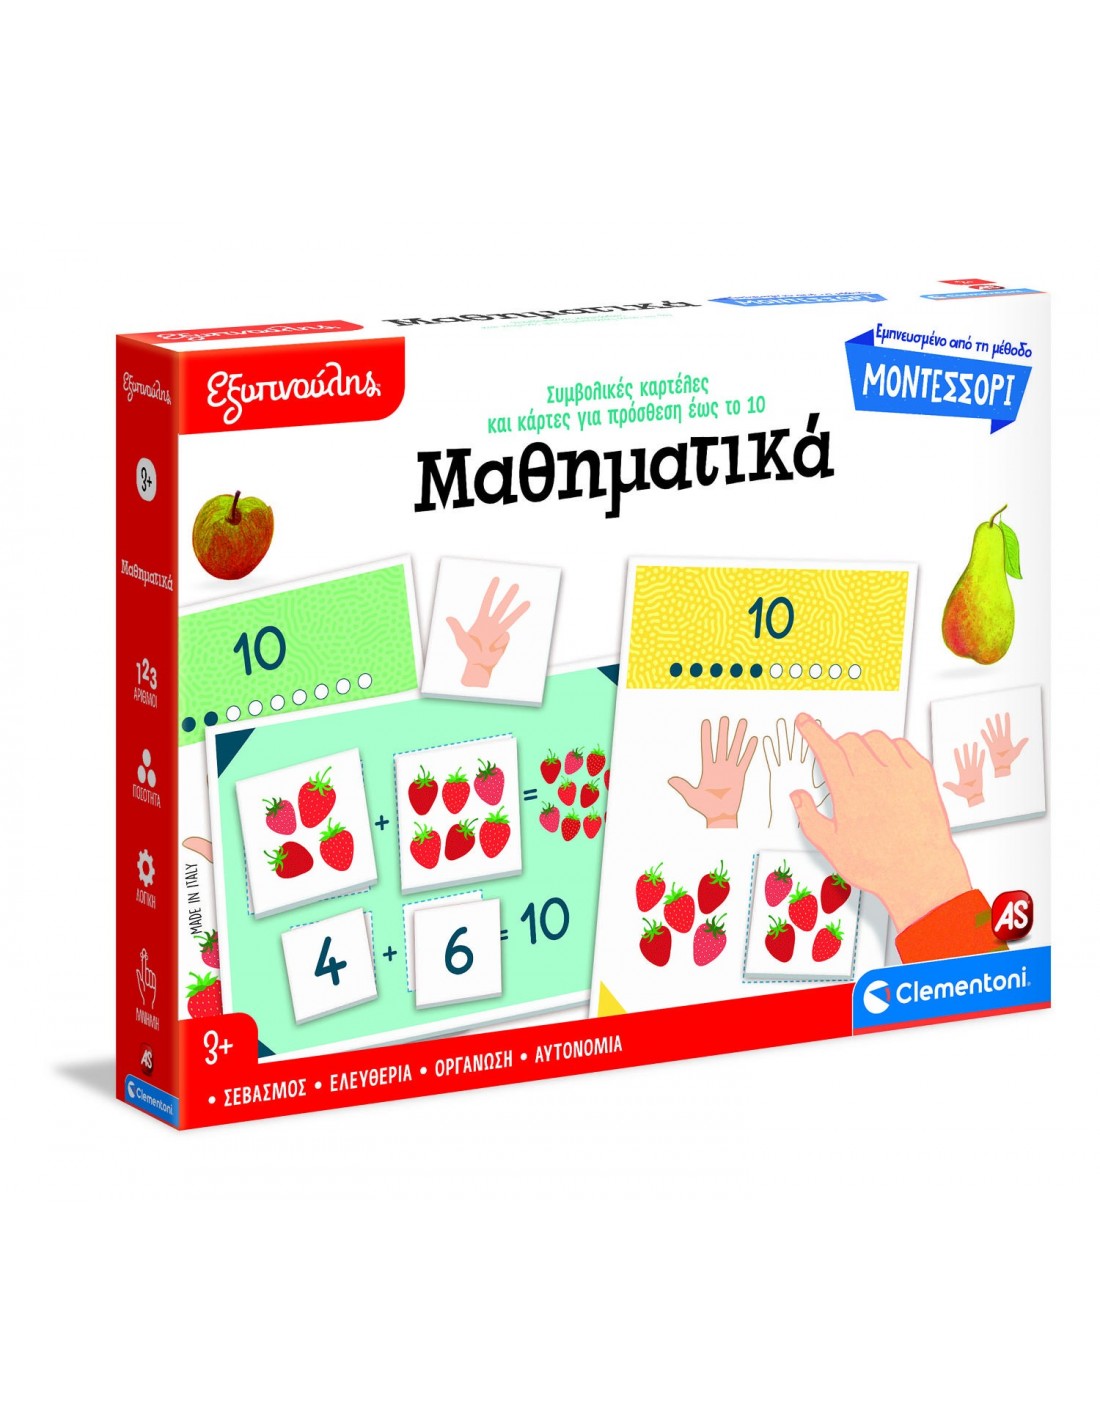 AS Games Εξυπνούλης Montessori Μαθηματικά (3+ ετών)